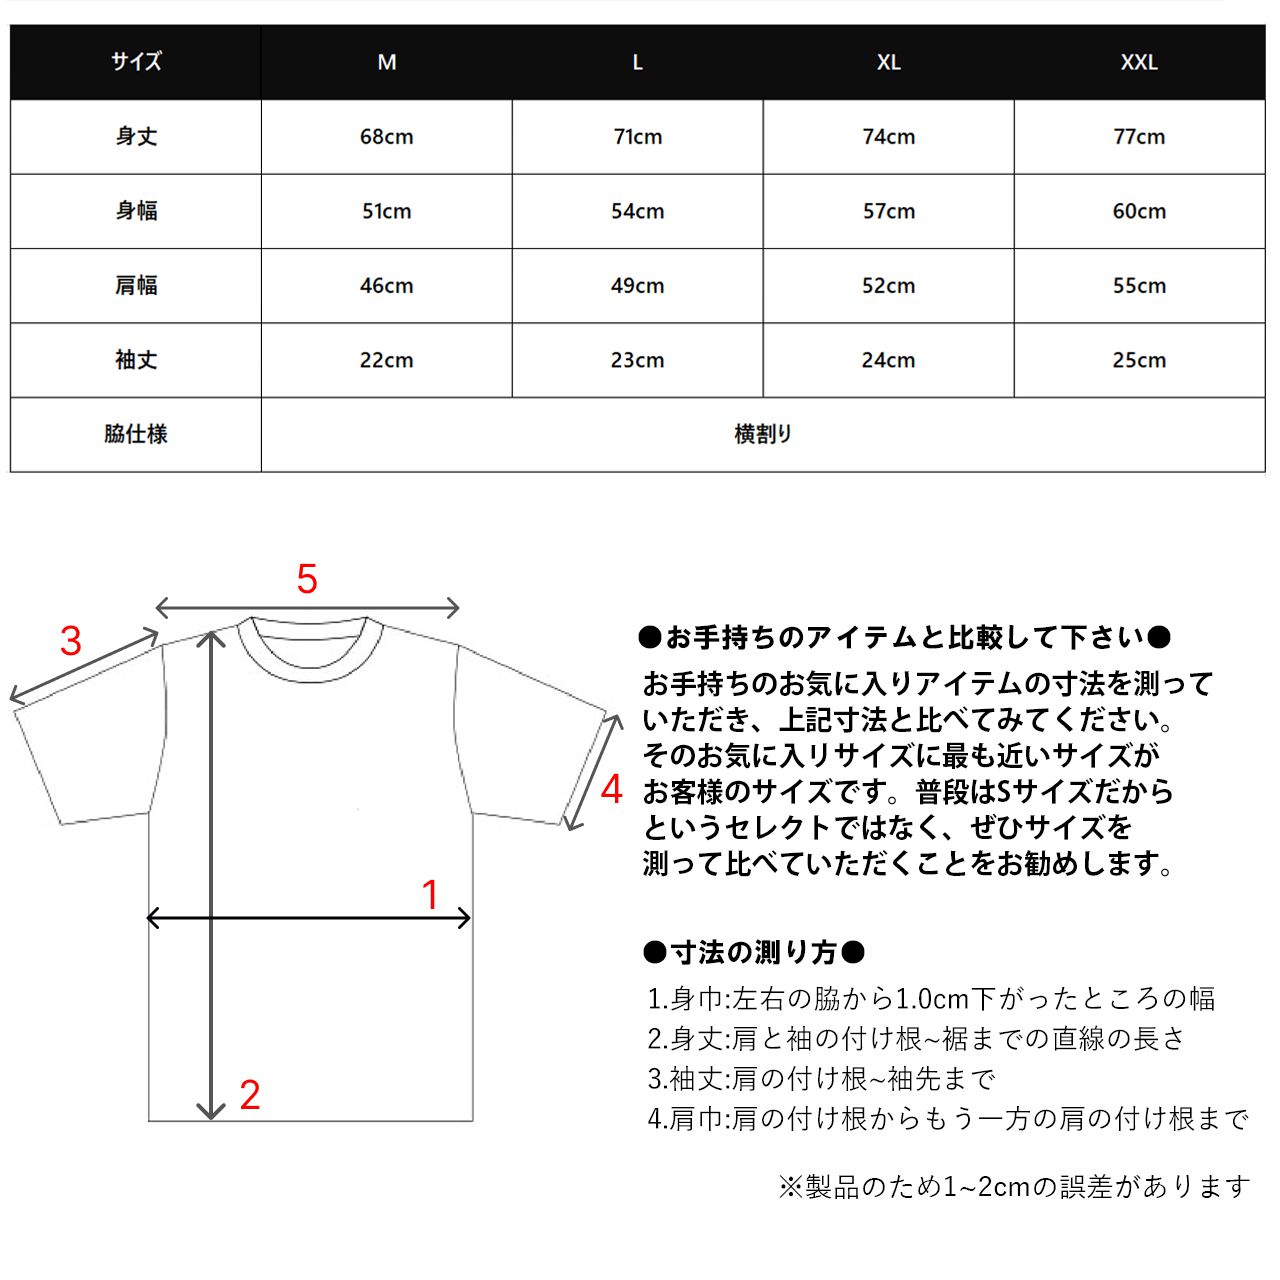 GANGSTAR SHOWKAI■2ndモデル Tシャツ極厚10.2oz ブラックボディ×ダークグレーロゴ